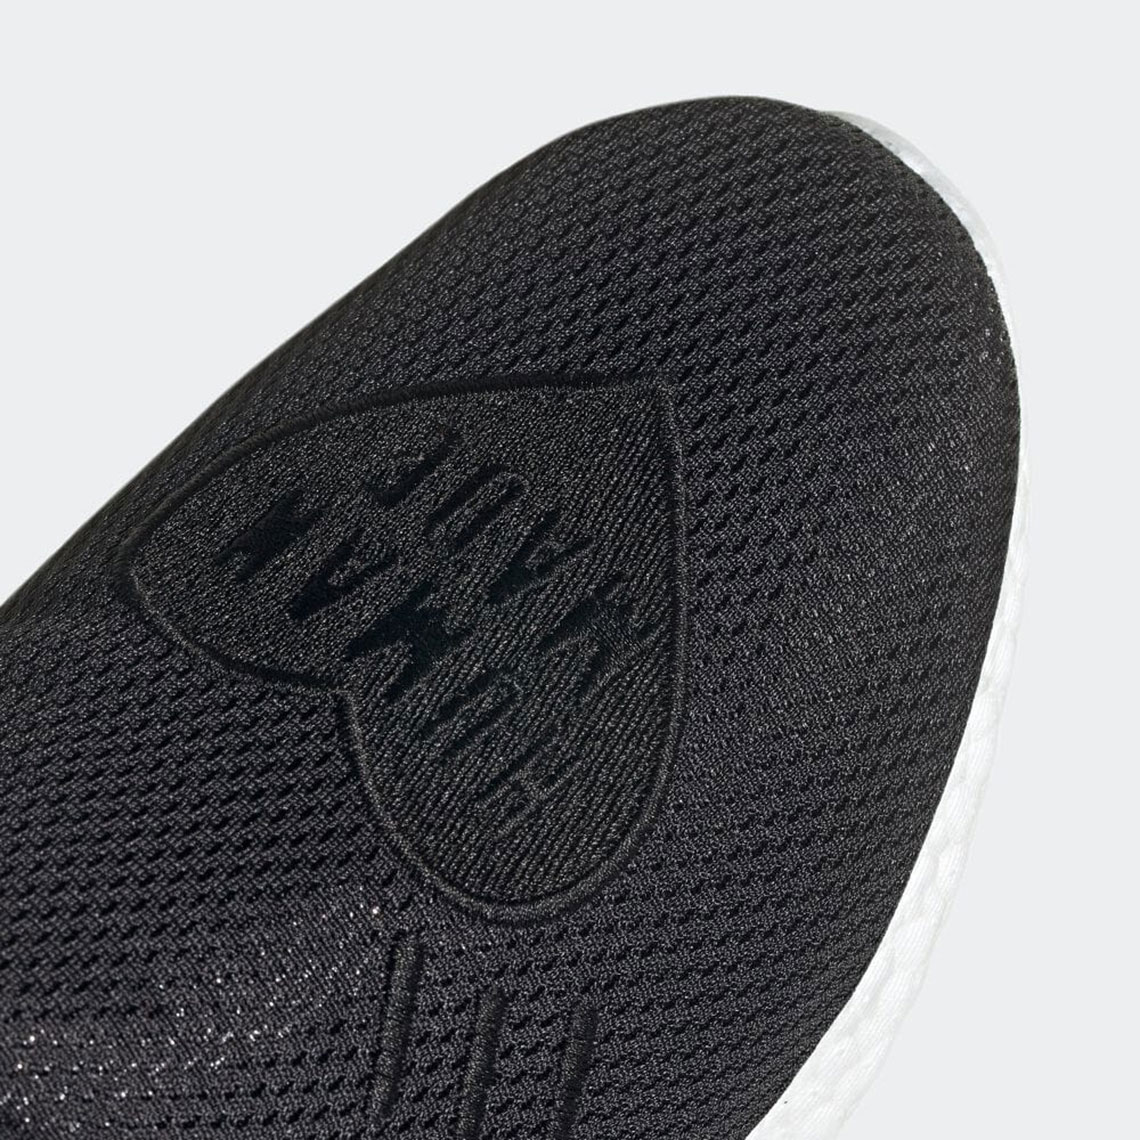 Adidas Human Made Pure Slip On Core Black H02546 5